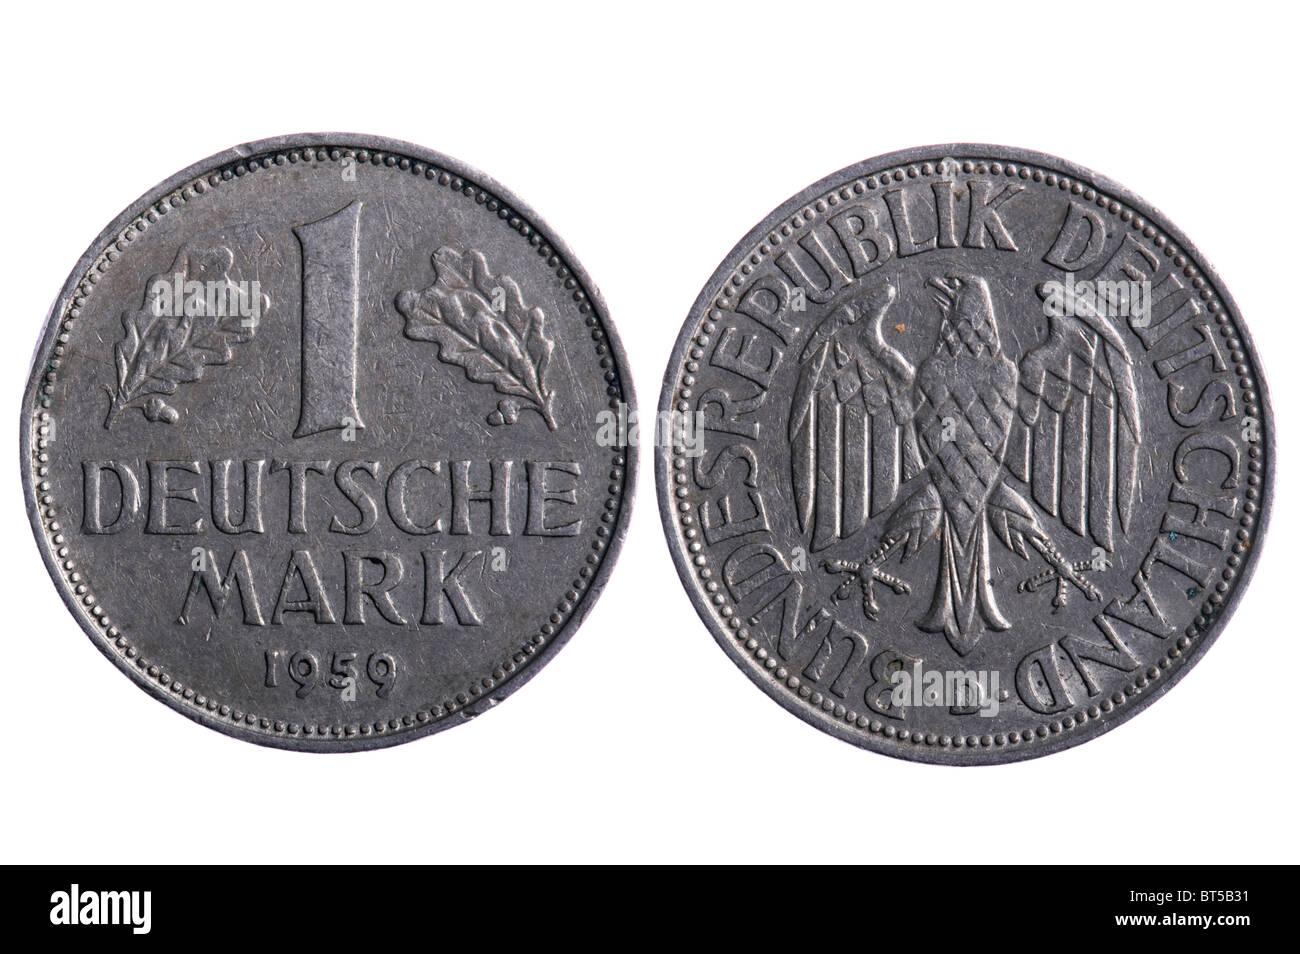 object on white - Deutsche mark coins Stock Photo